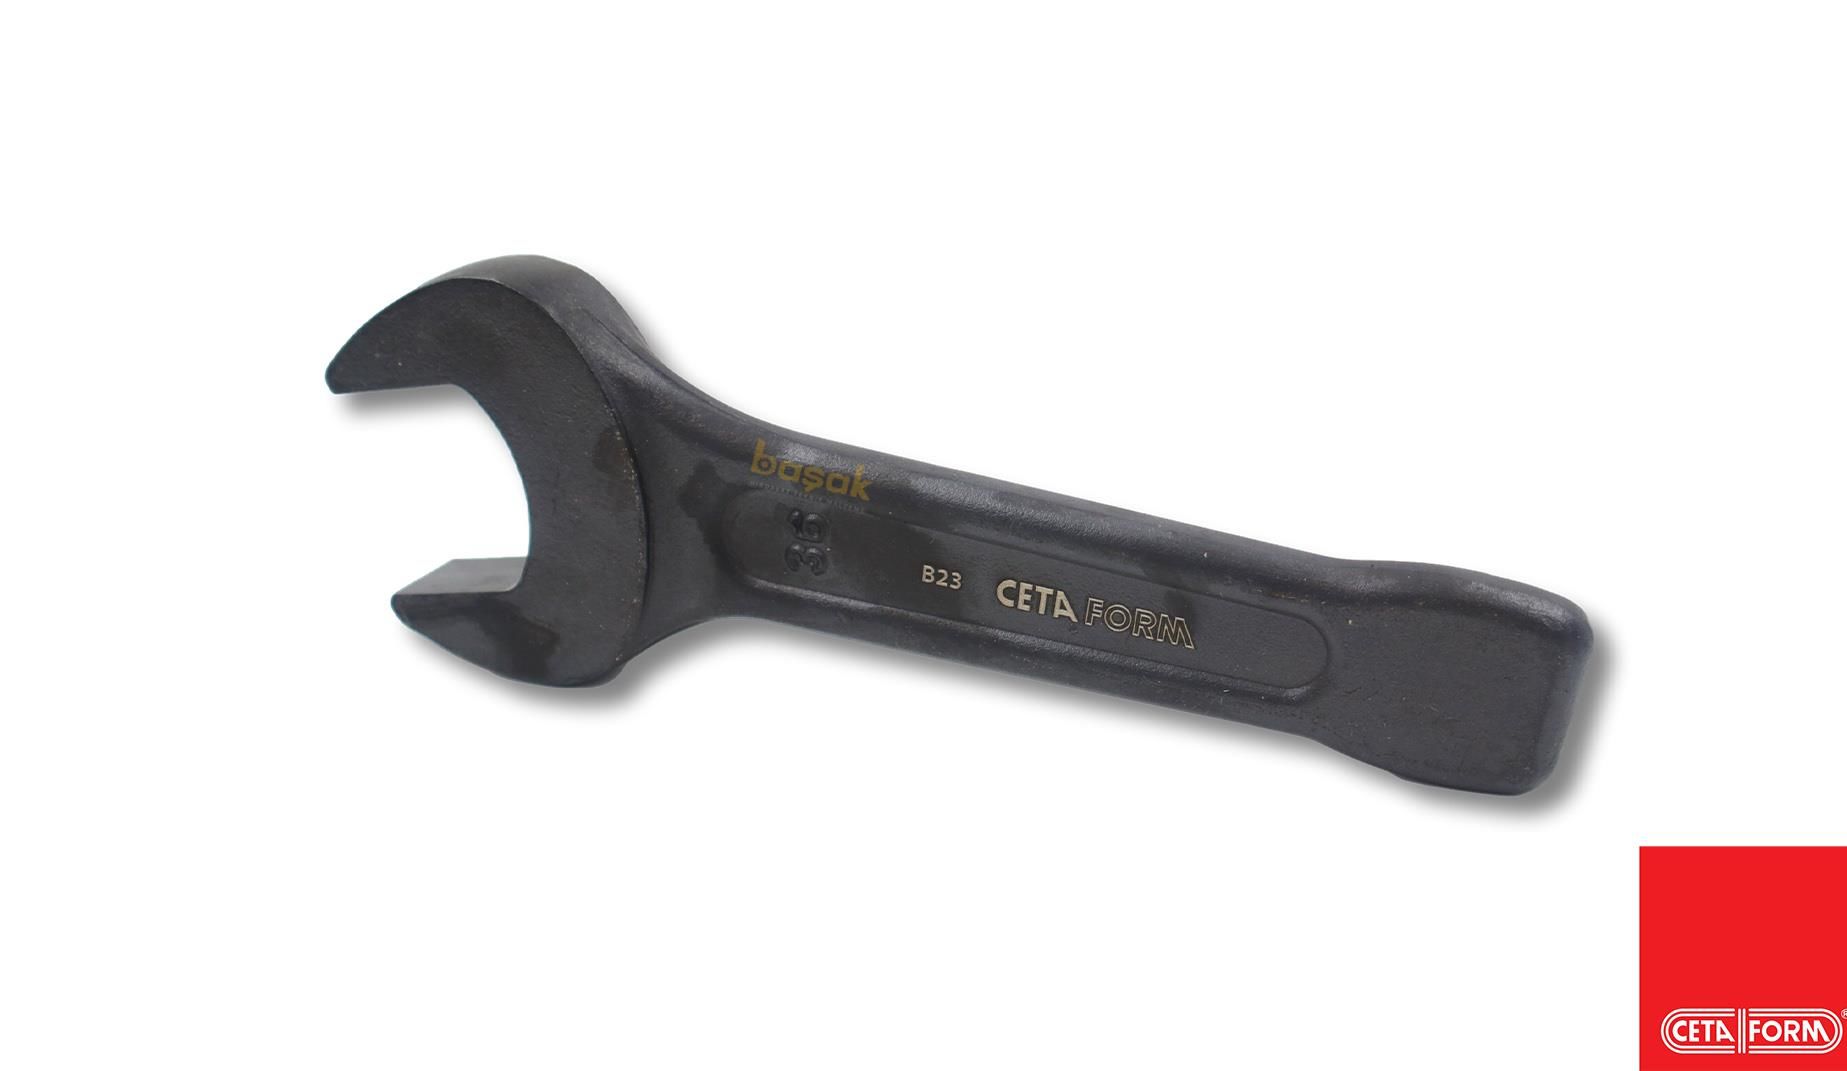 Ceta Form 36 mm Açık Ağız Darbeli (Çakma) Anahtar B23-36